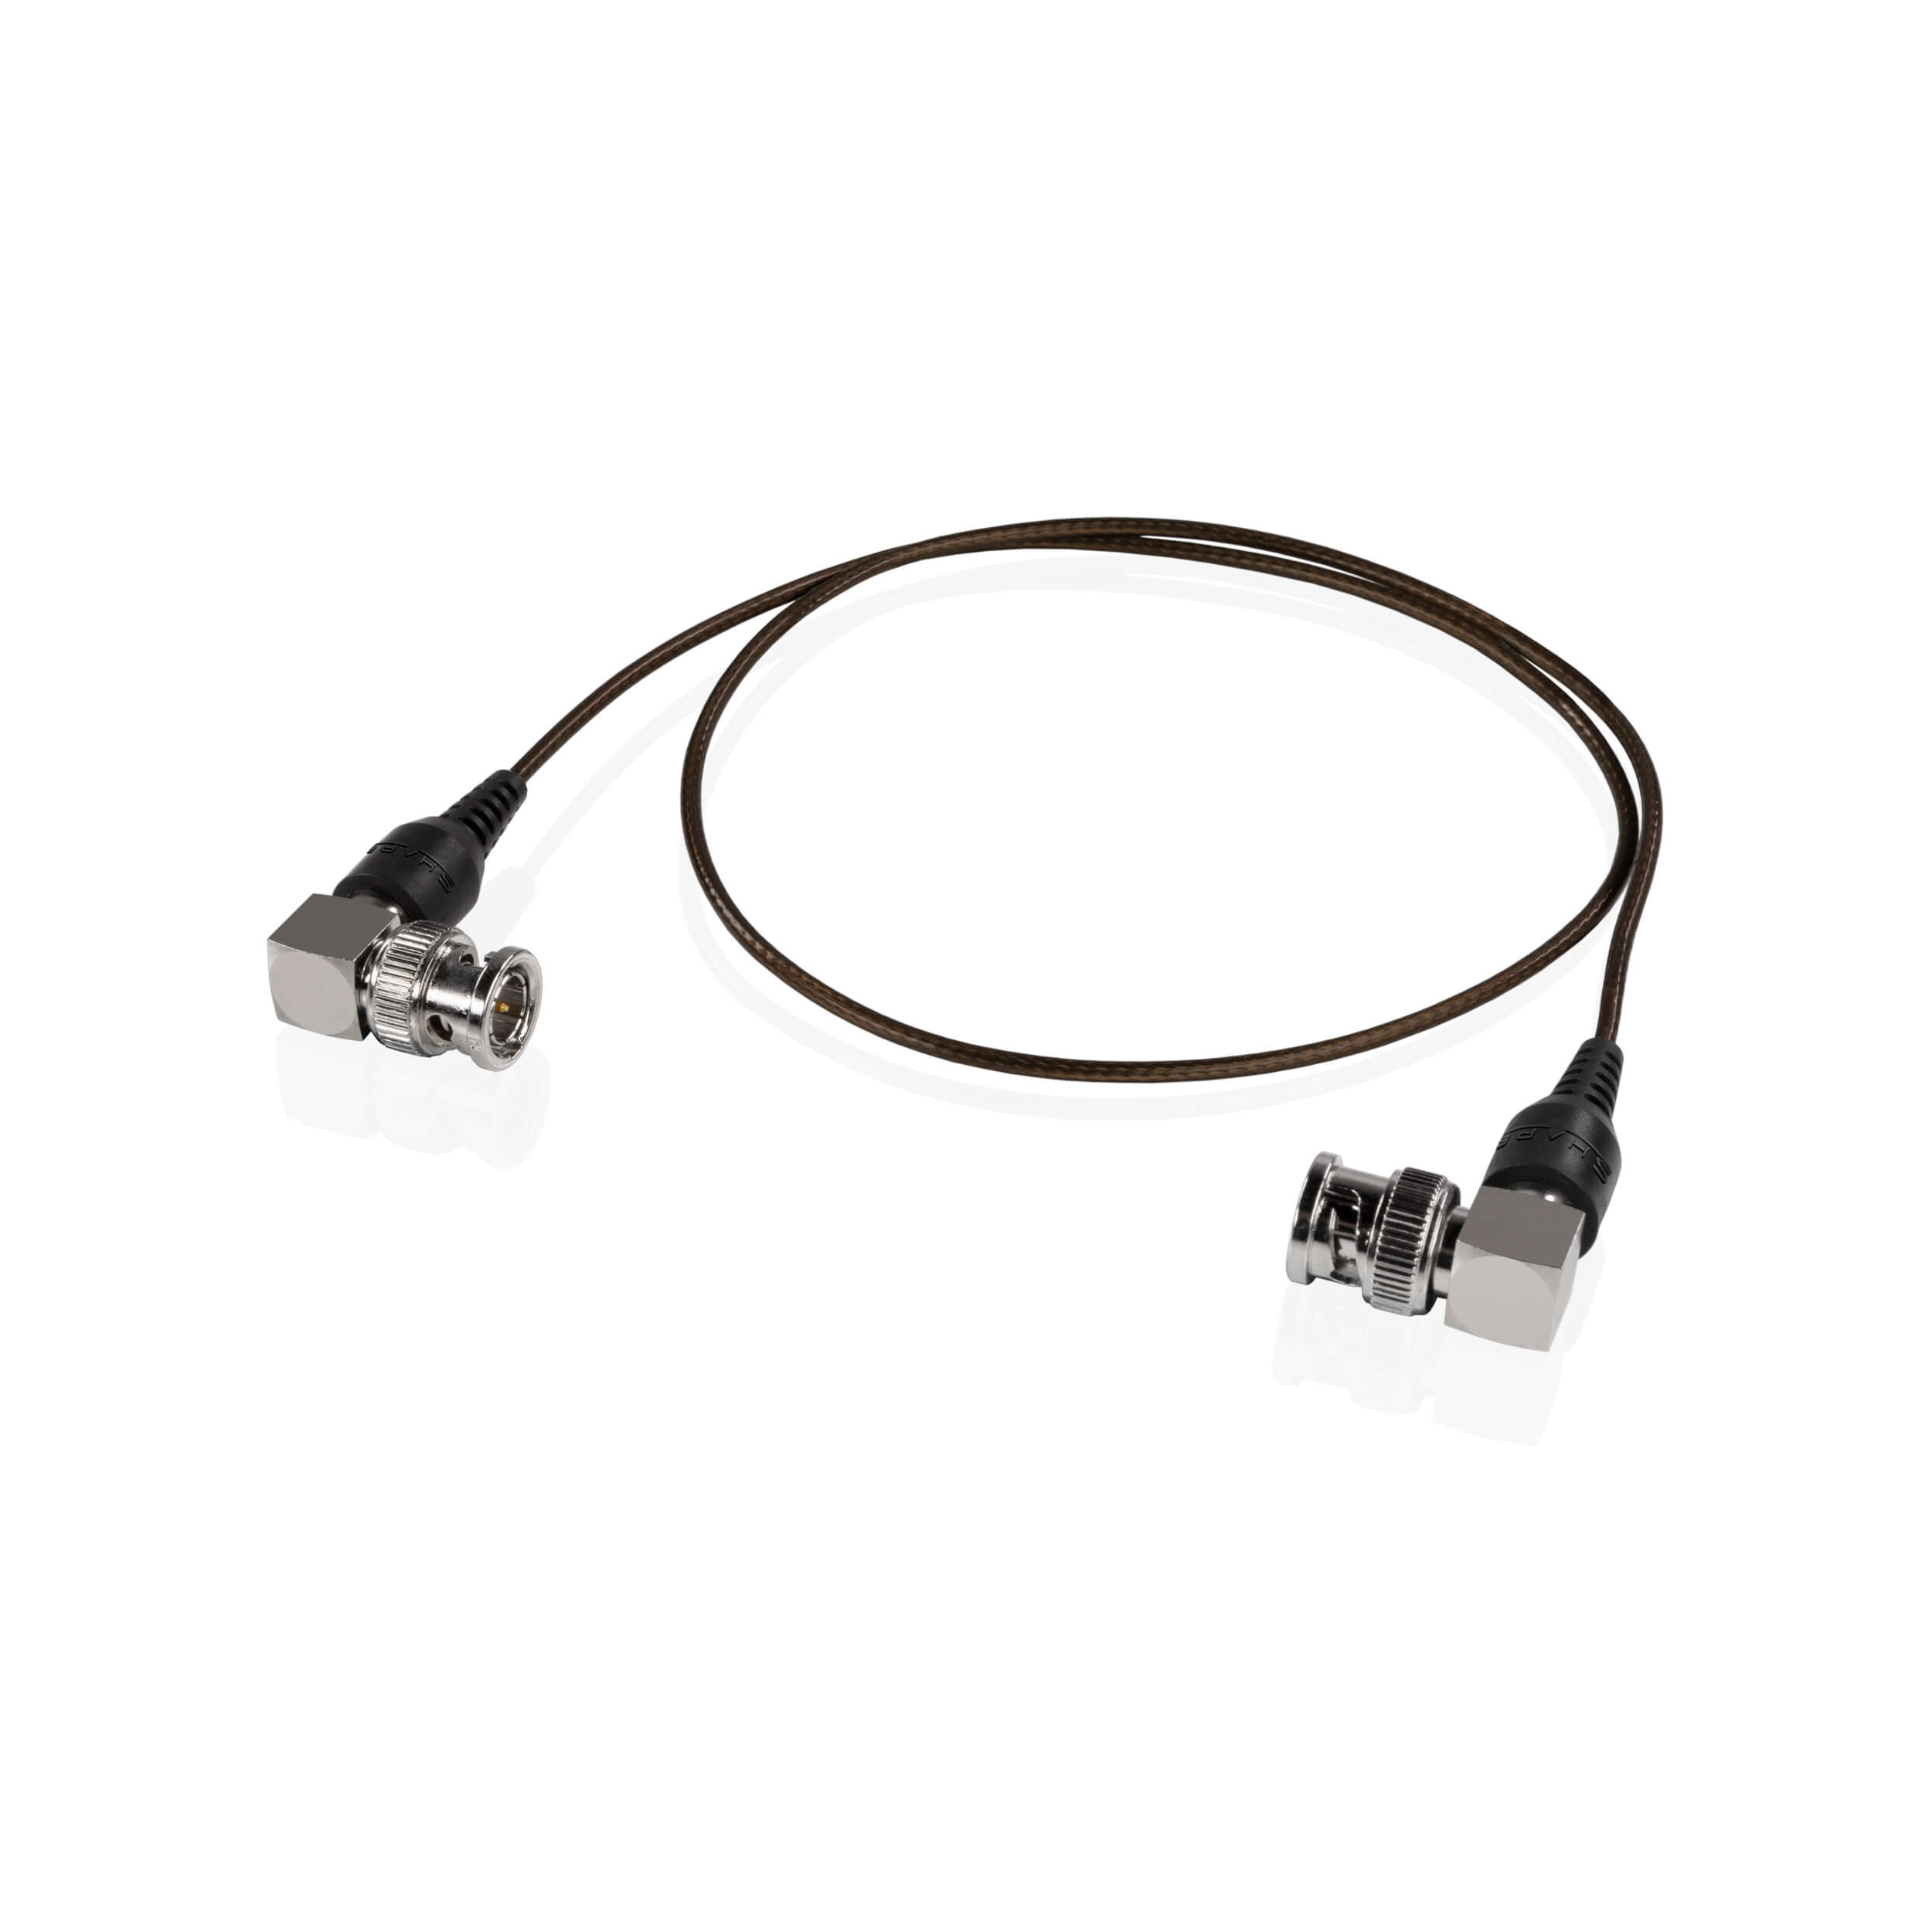 SHAPE Skinny 90° BNC Cable (Black, 24")